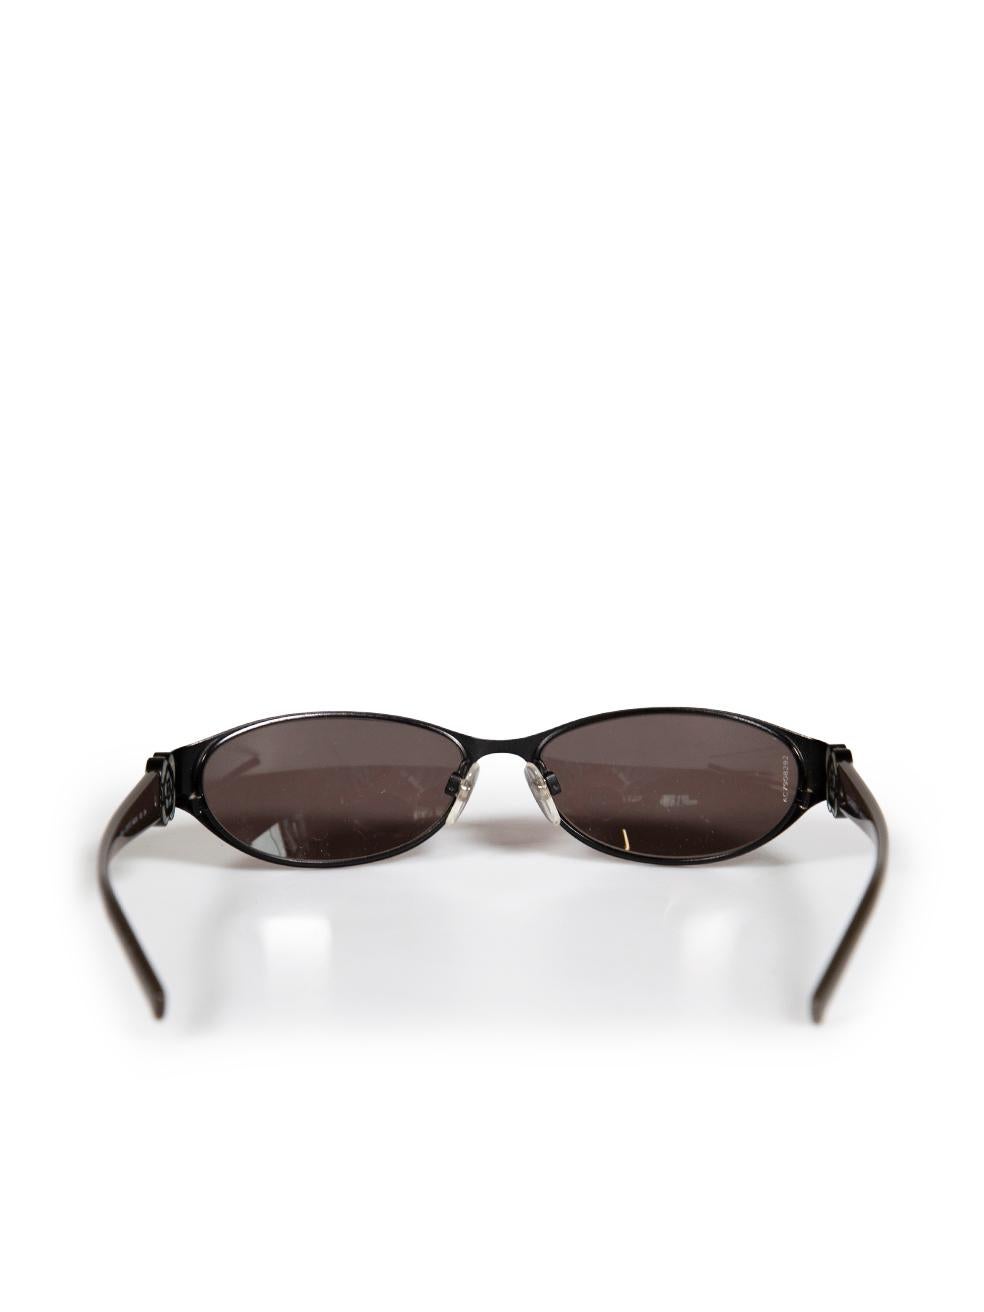 Chanel Black Camellia Accent Sunglasses In Excellent Condition In London, GB